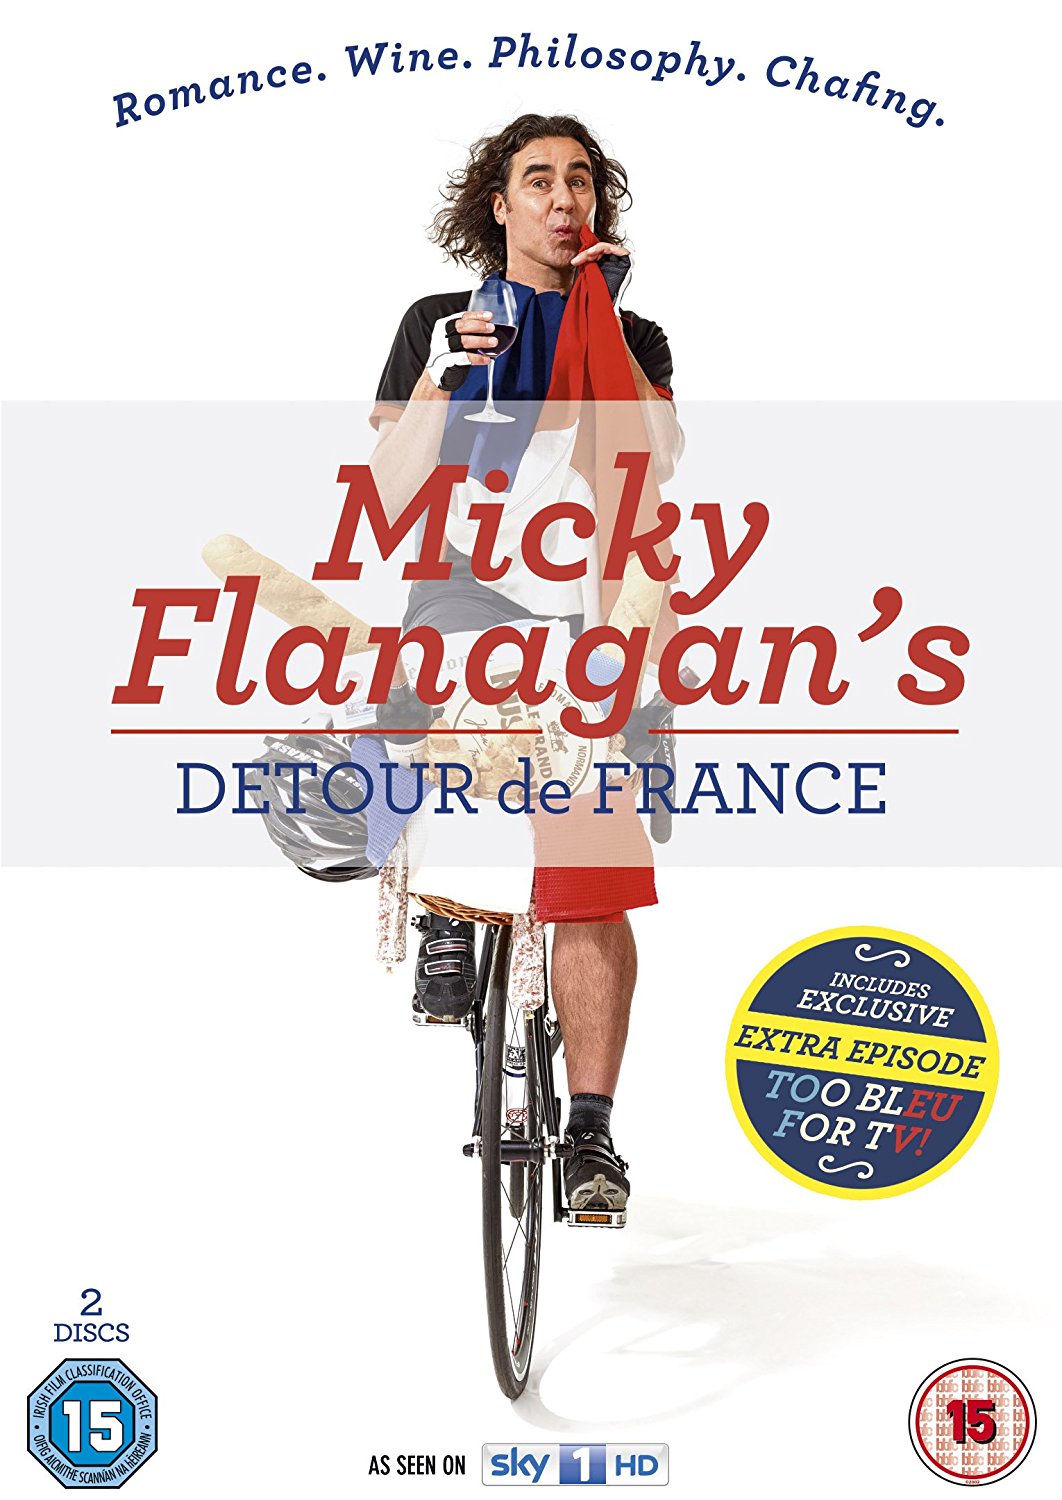 Micky Flanagan Detour De France (DVD)